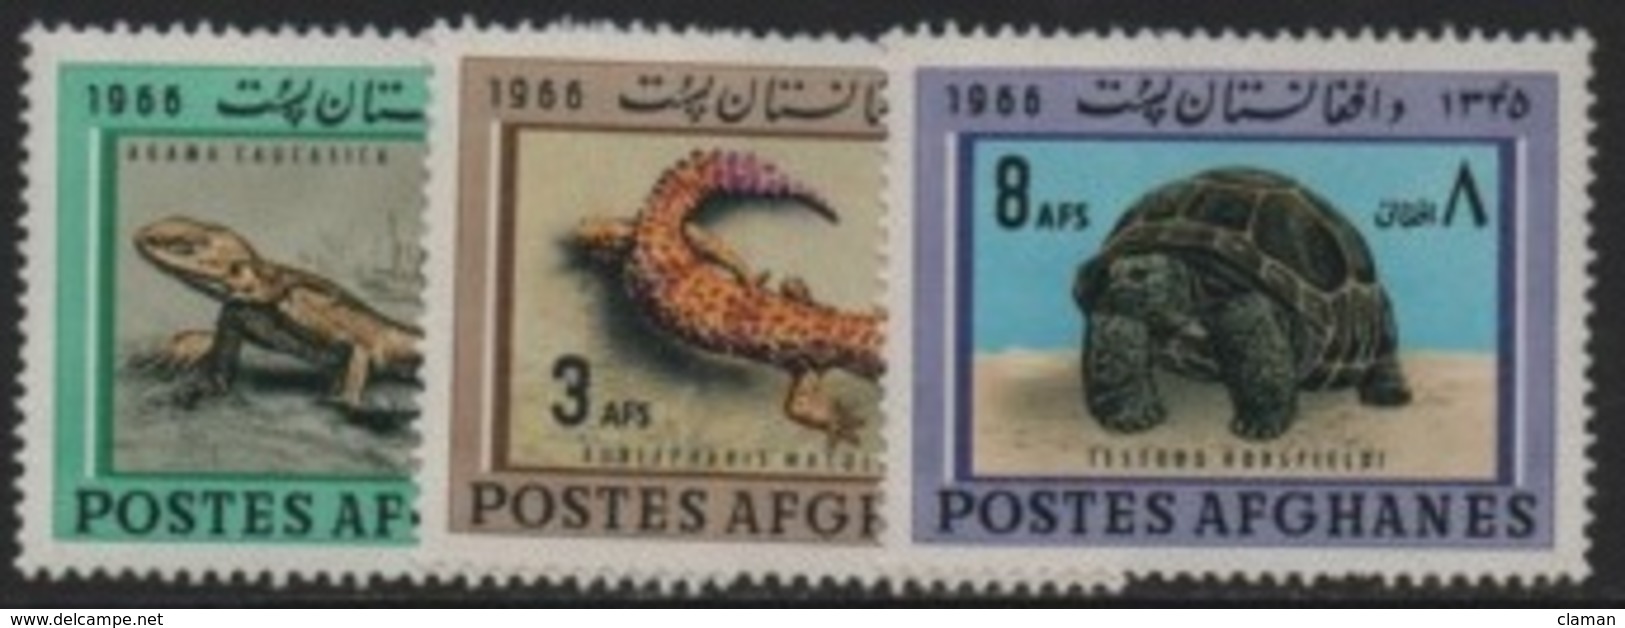 Afghanistan - 1966 Animals-Animaux-Tiere (Turtle/Lizard-Tortue/Lézard)  ** - Afghanistan